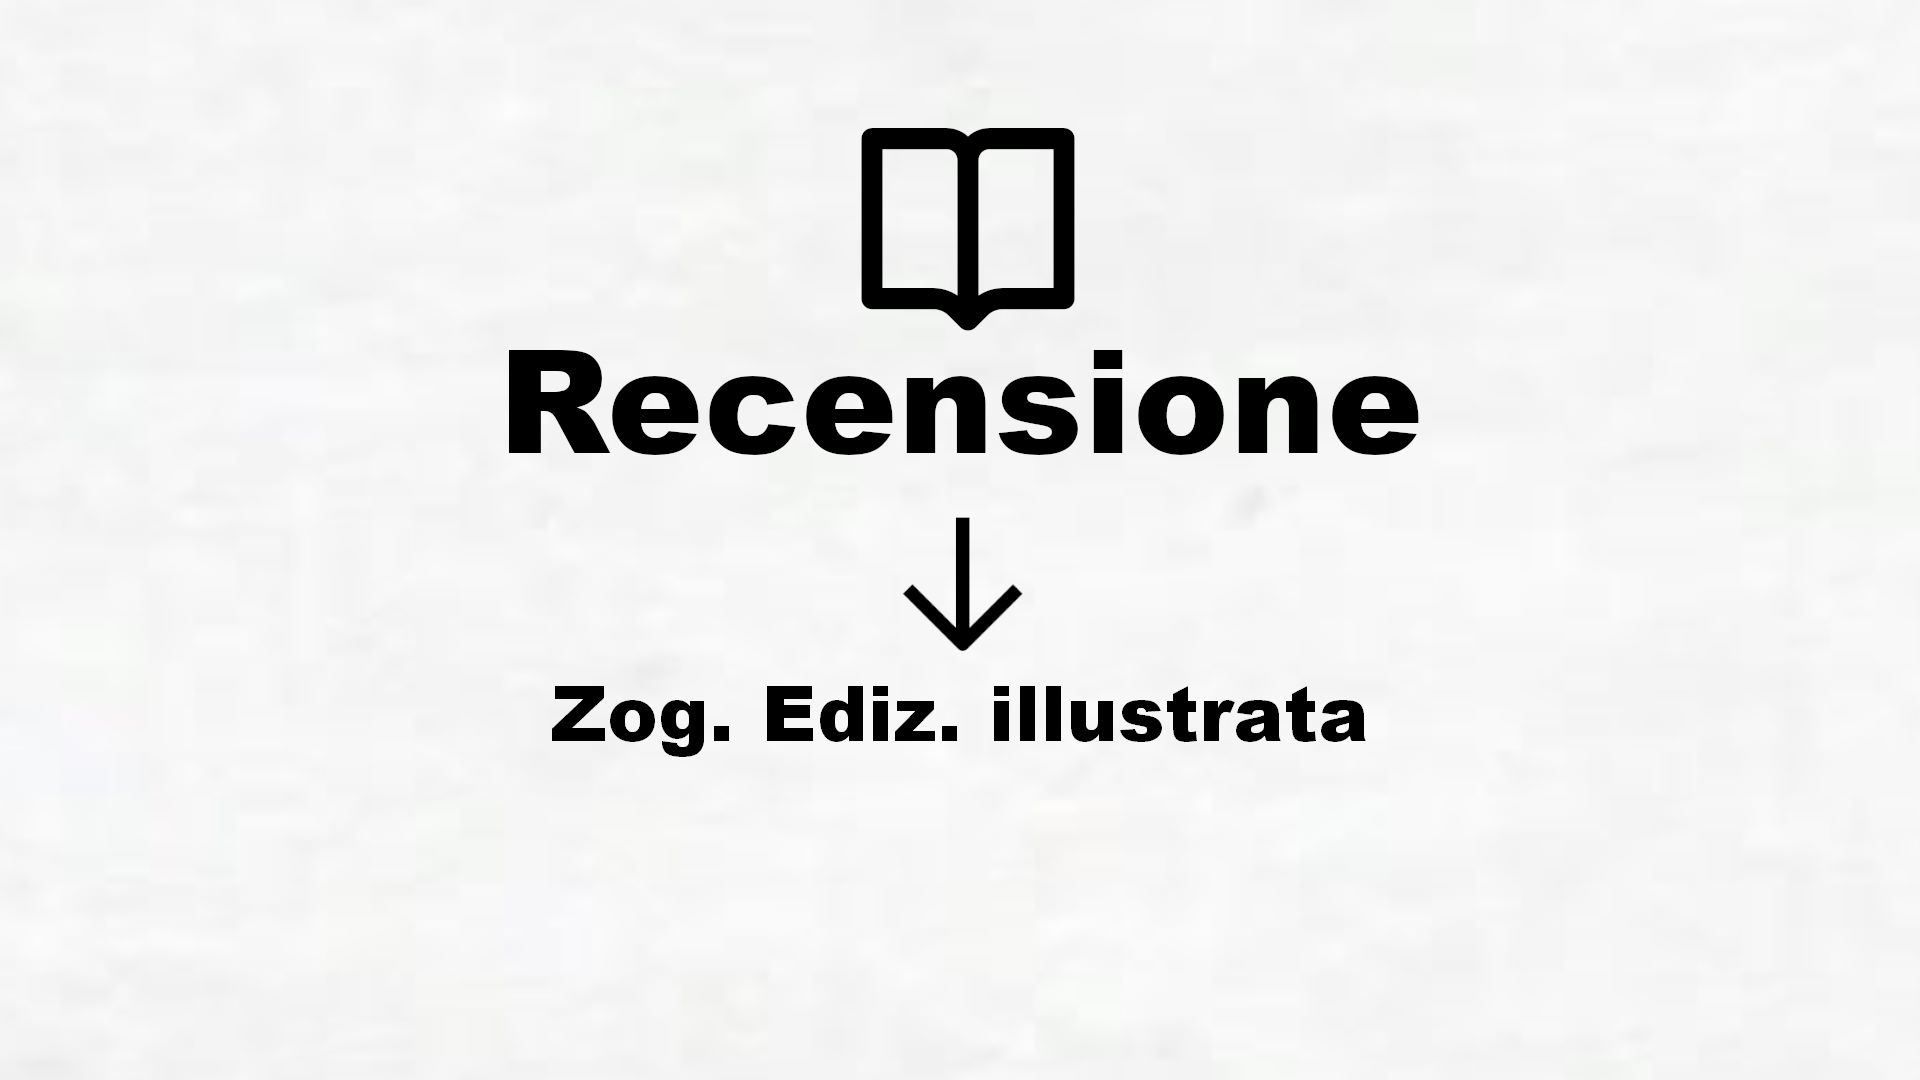 Zog. Ediz. illustrata – Recensione Libro